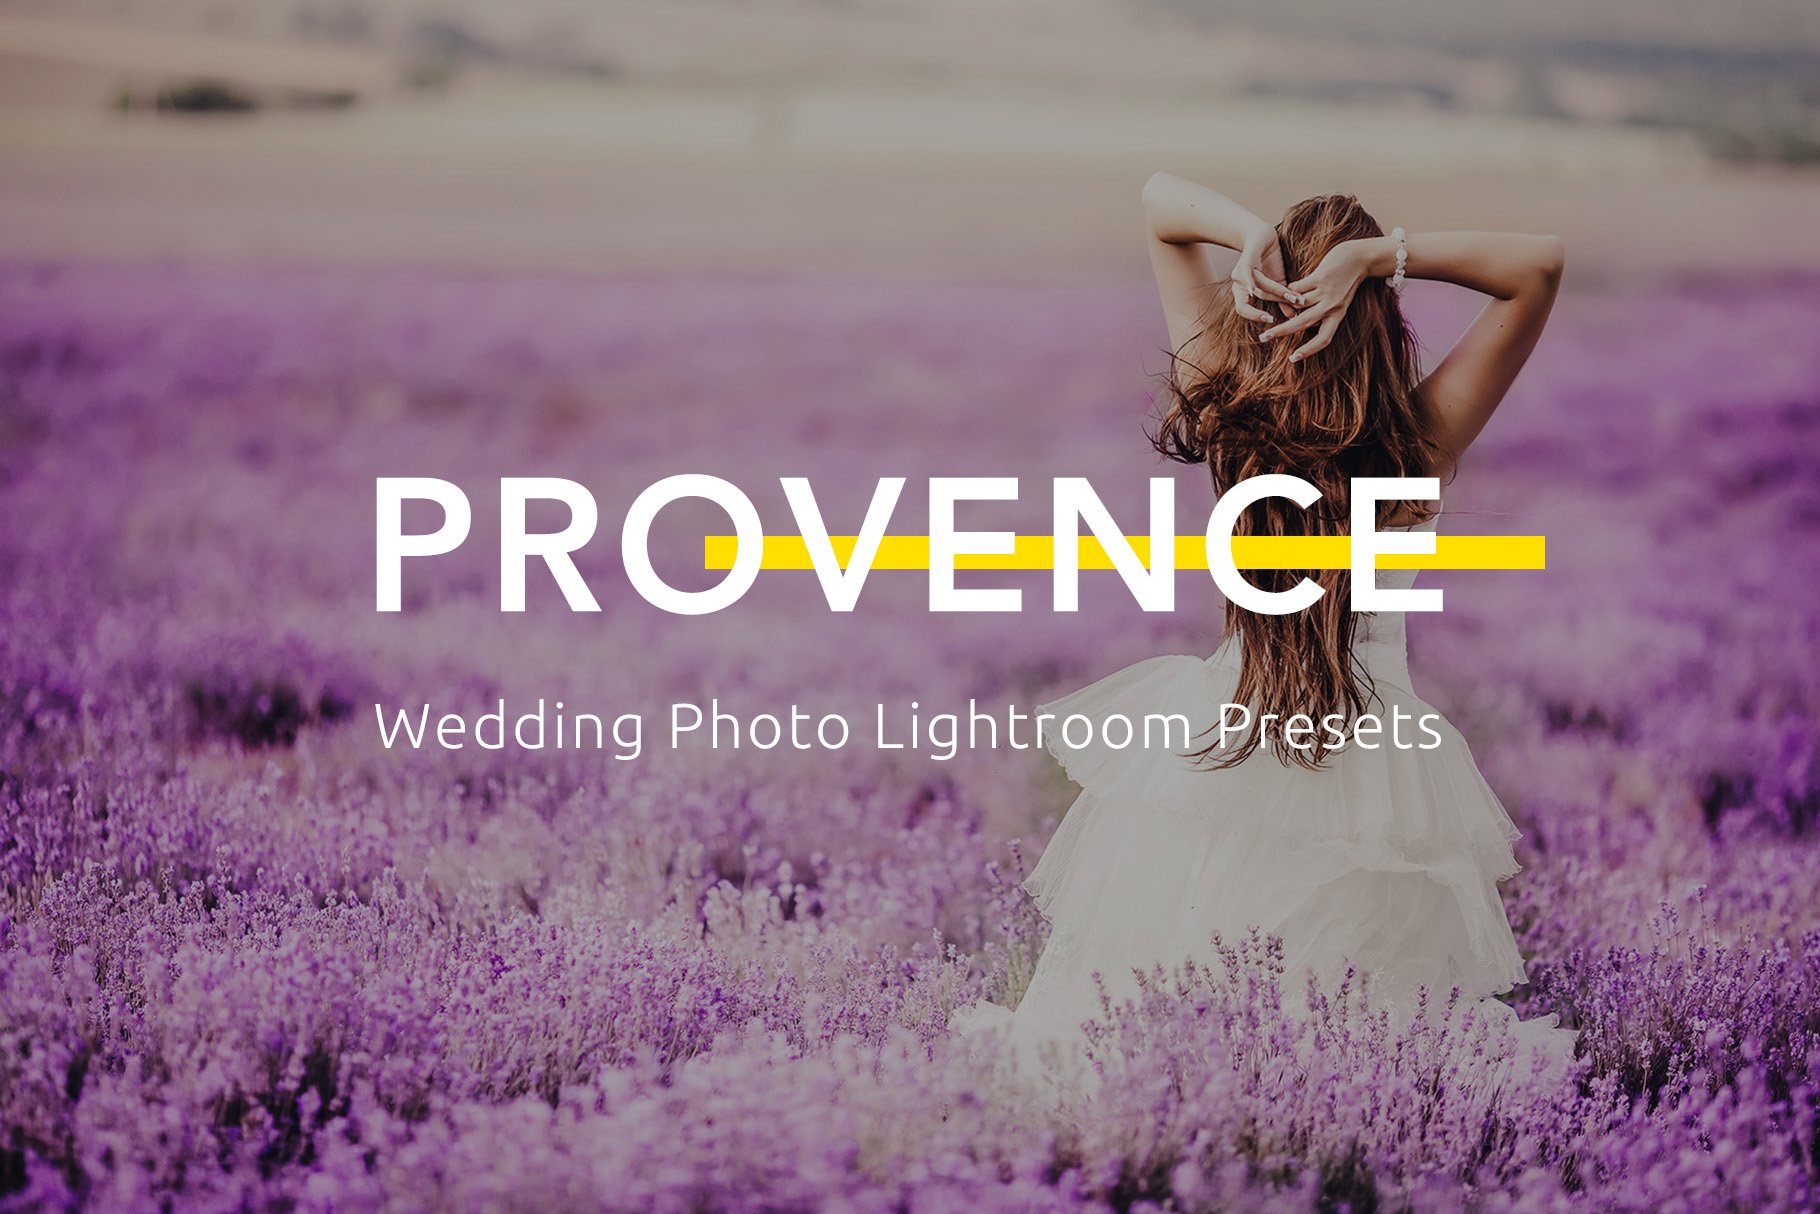 Provence - Wedding Lightroom Presetscover image.